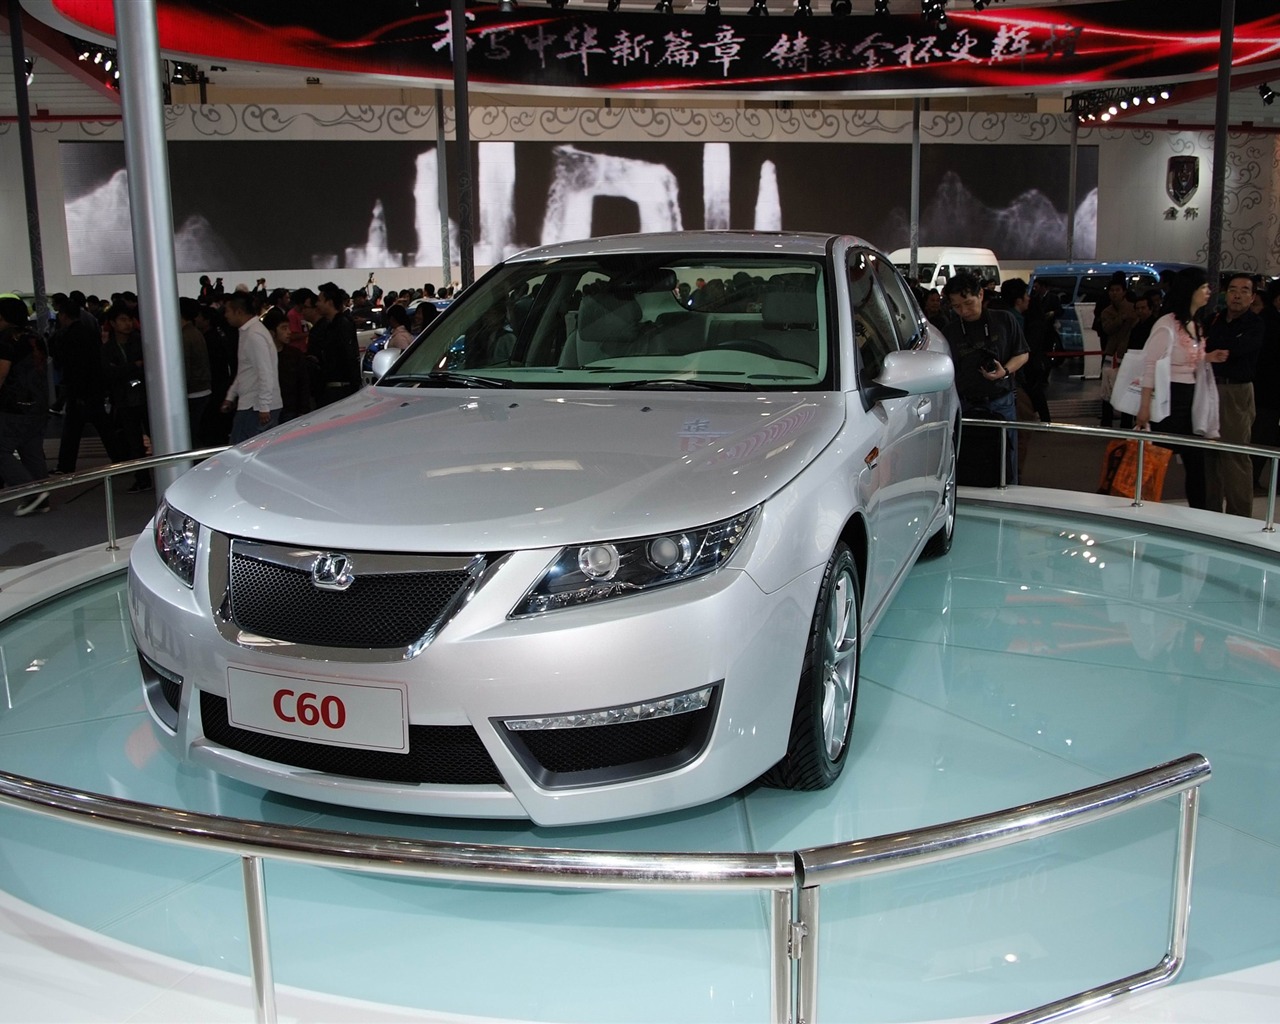 2010 Beijing International Auto Show Heung Che (œuvres des barres d'armature) #9 - 1280x1024